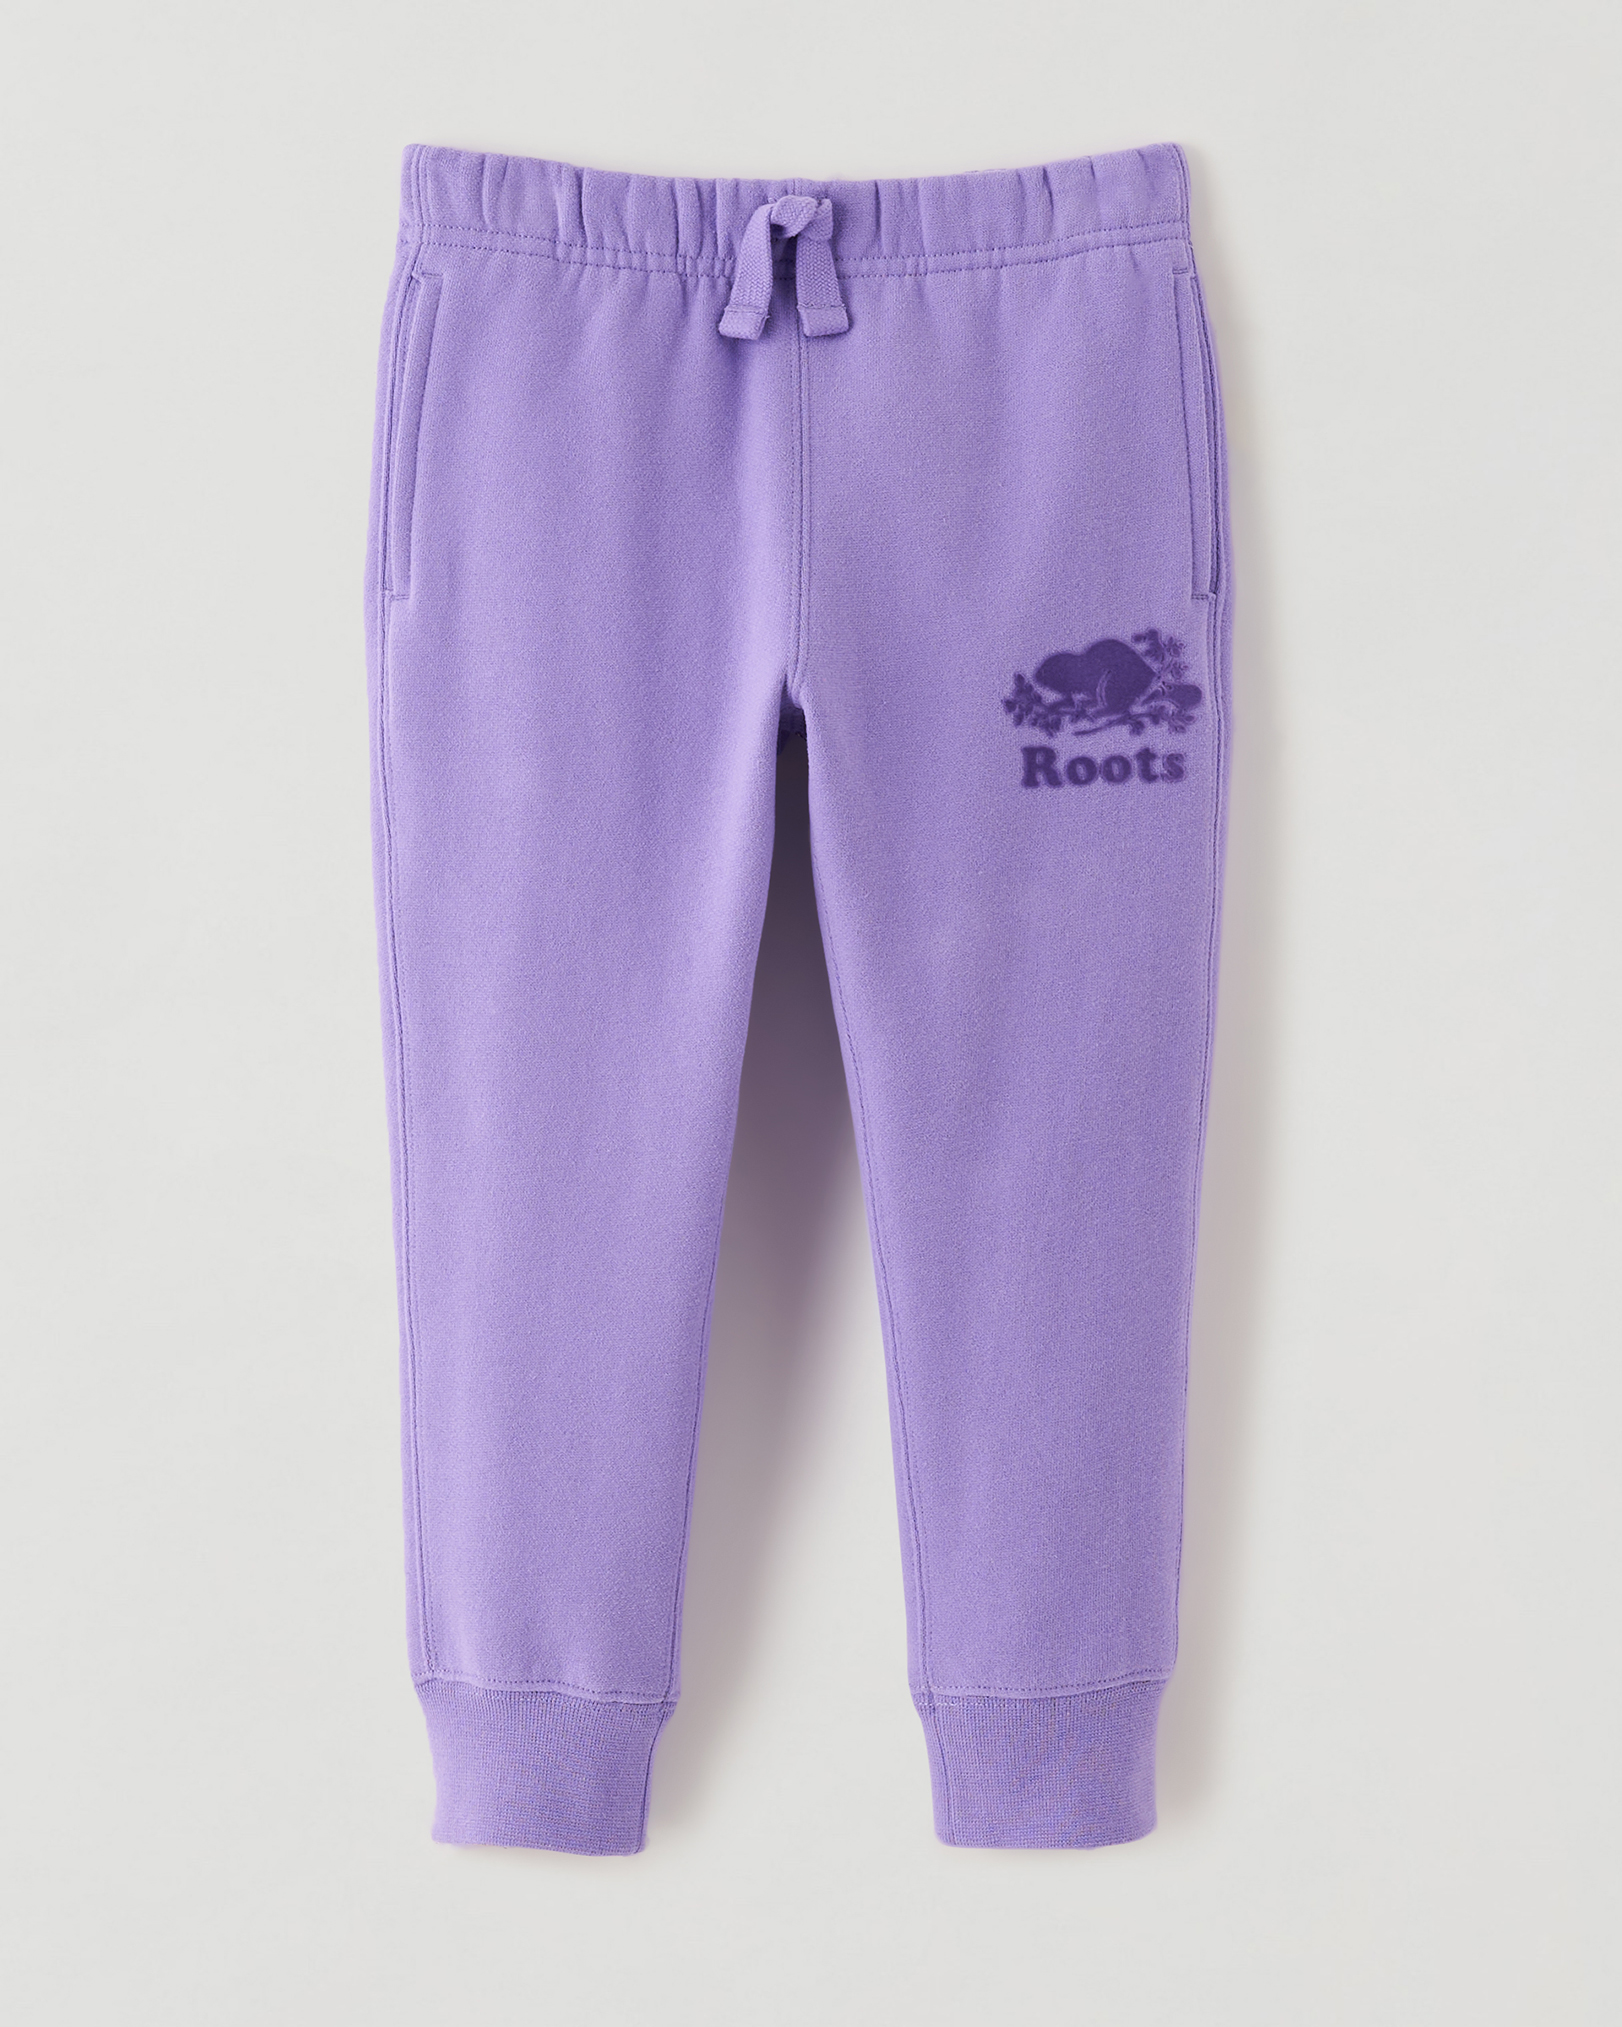 Roots Toddler Girl's Slim Cuff Tonal Sweatpant in Paisley Purple